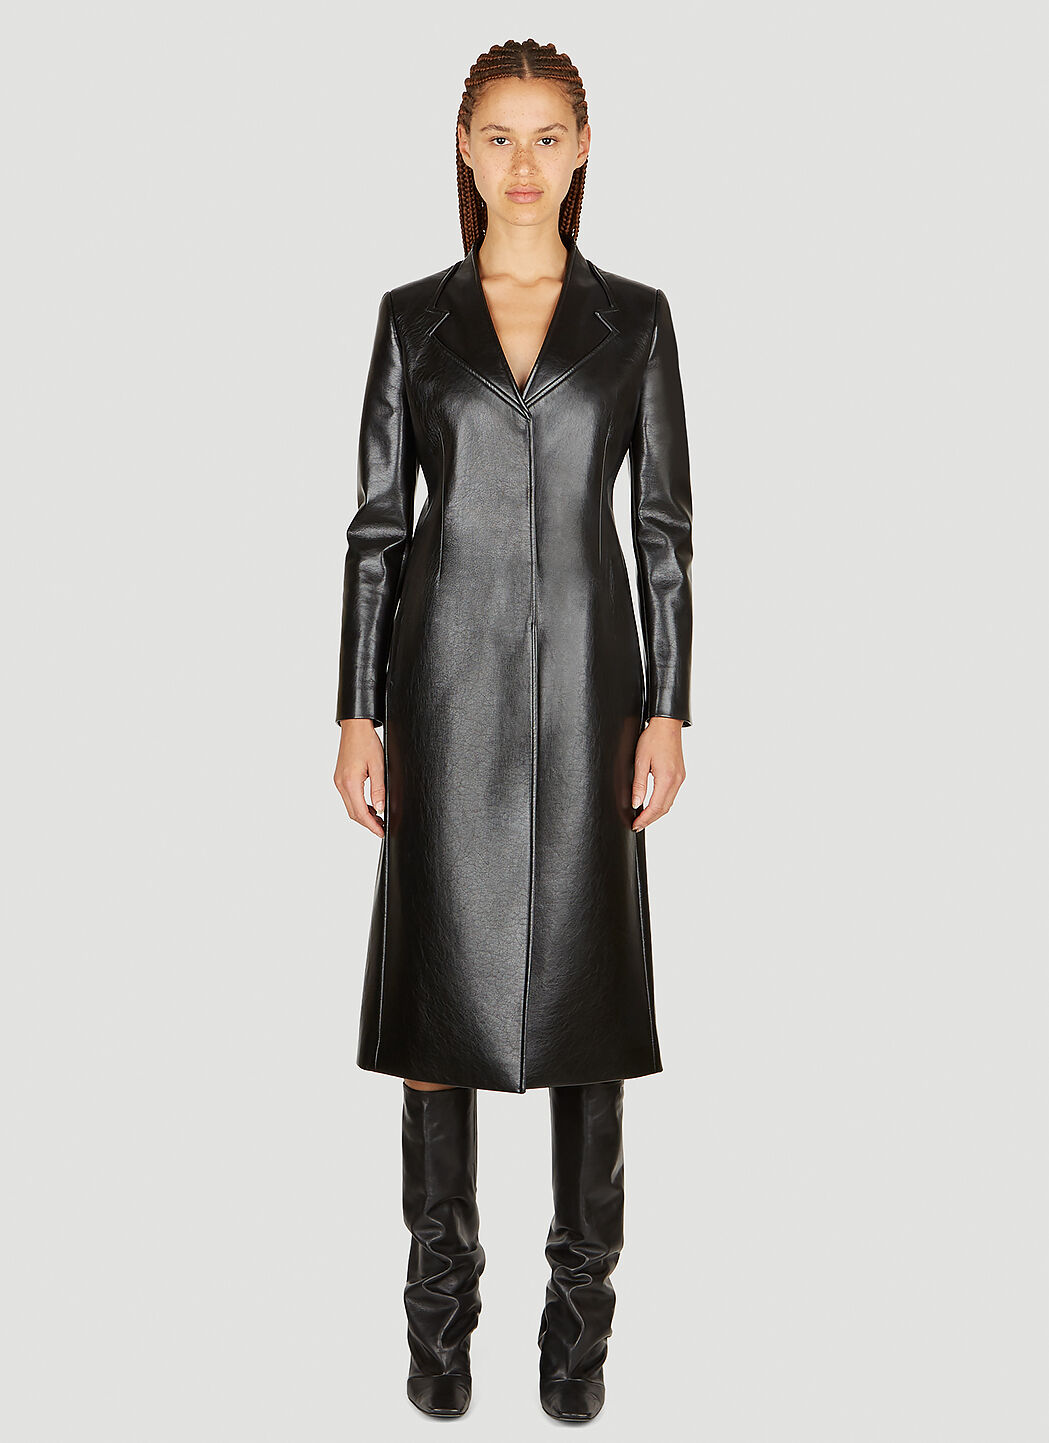 Coperni Trompe-Loeil Tailored Faxu Leather Coat Black cpn0253004